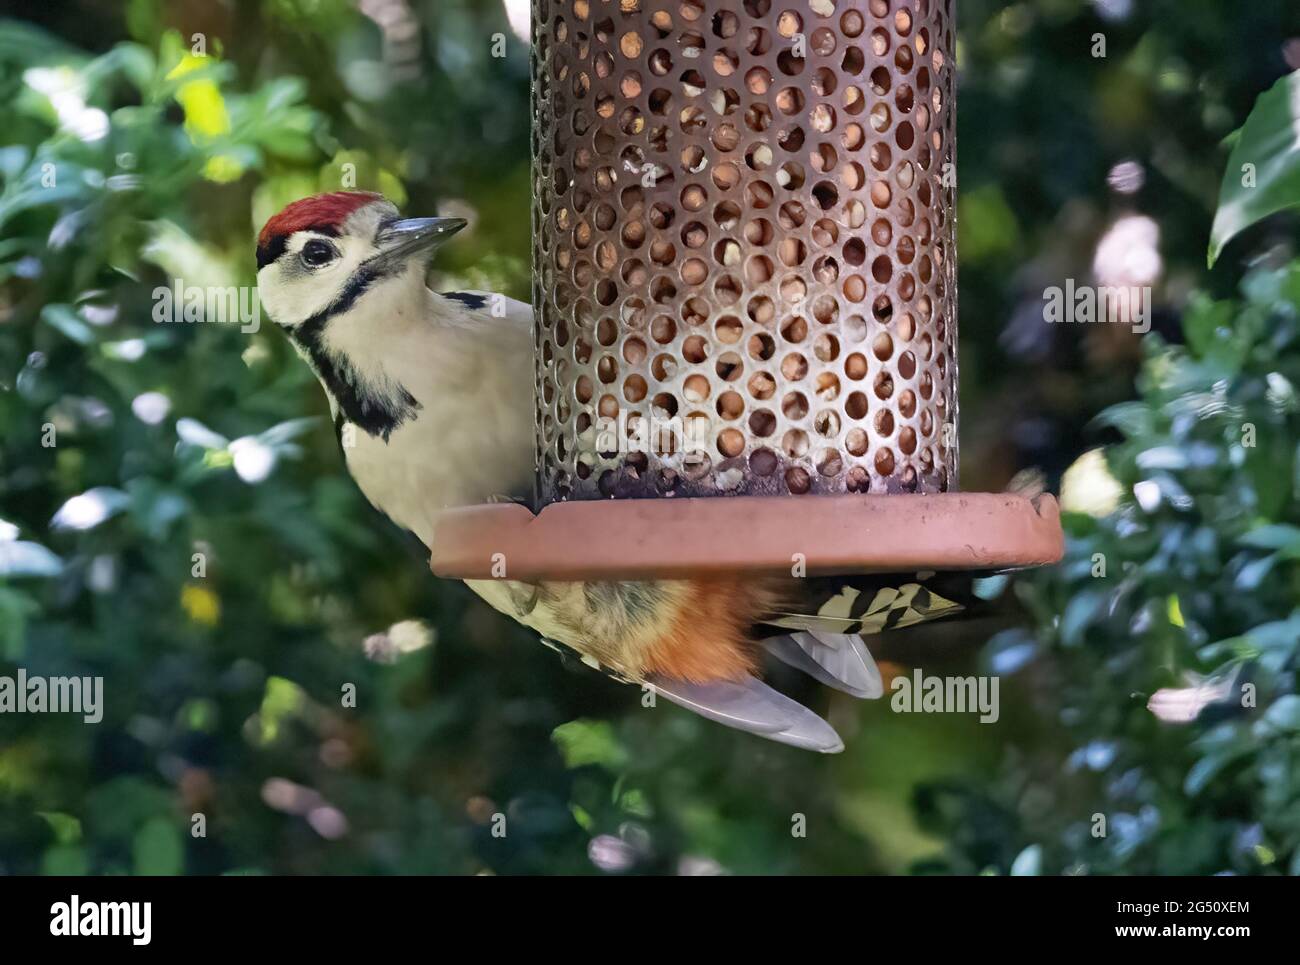 Adult Greater Spotted Woodpecker feeding on garden bird feeder, Dendrocopos major, UK Stock Photo